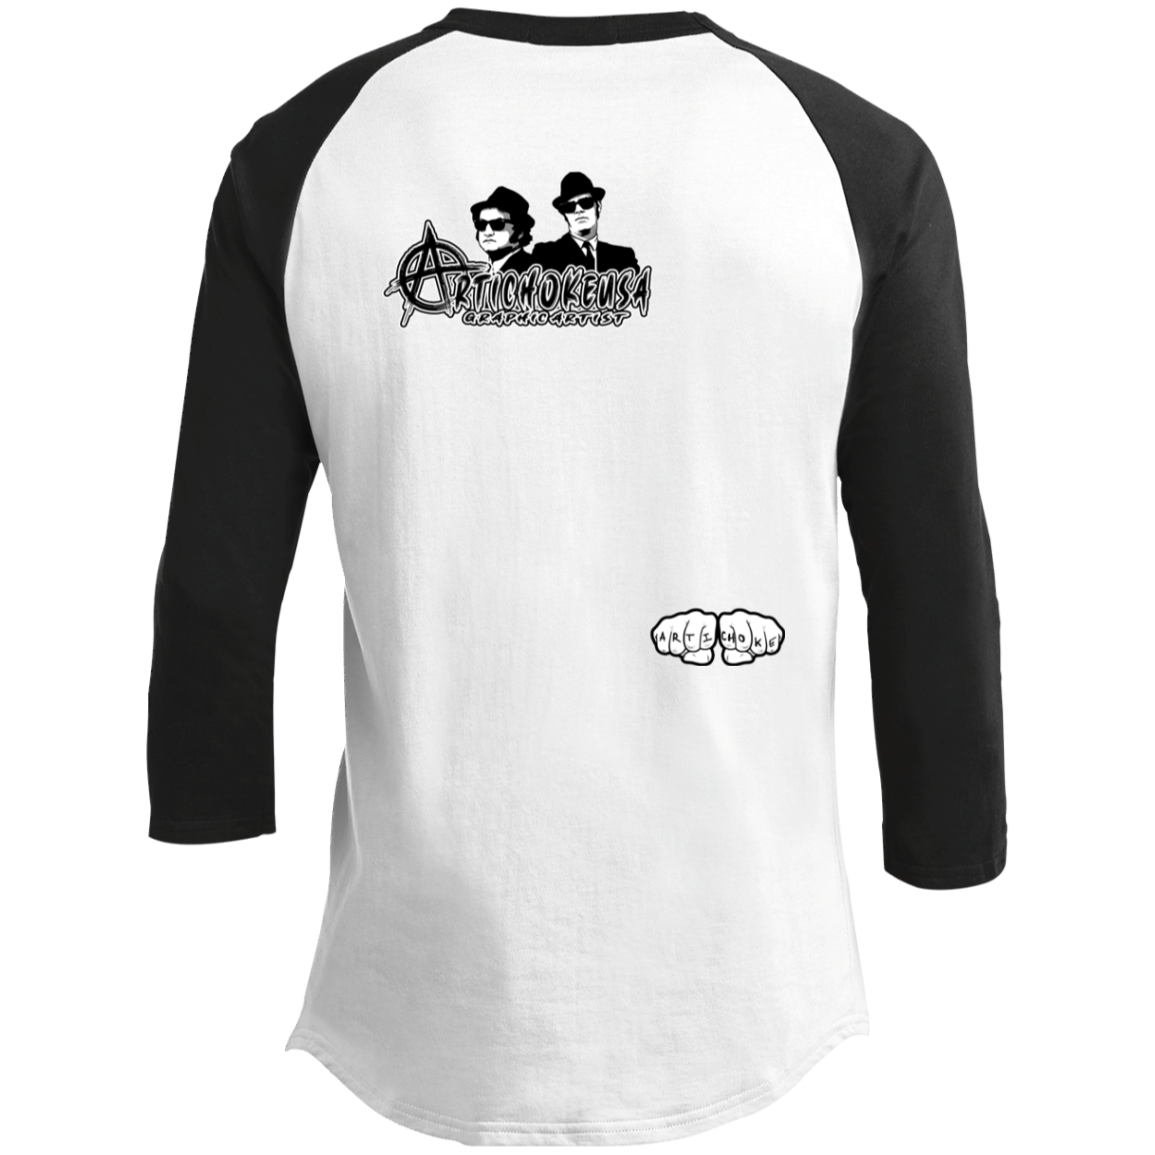 ArtichokeUSA Custom Design. The Good Ole Boys. Blues Brothers Fan Art. Youth 3/4 Raglan Sleeve Shirt